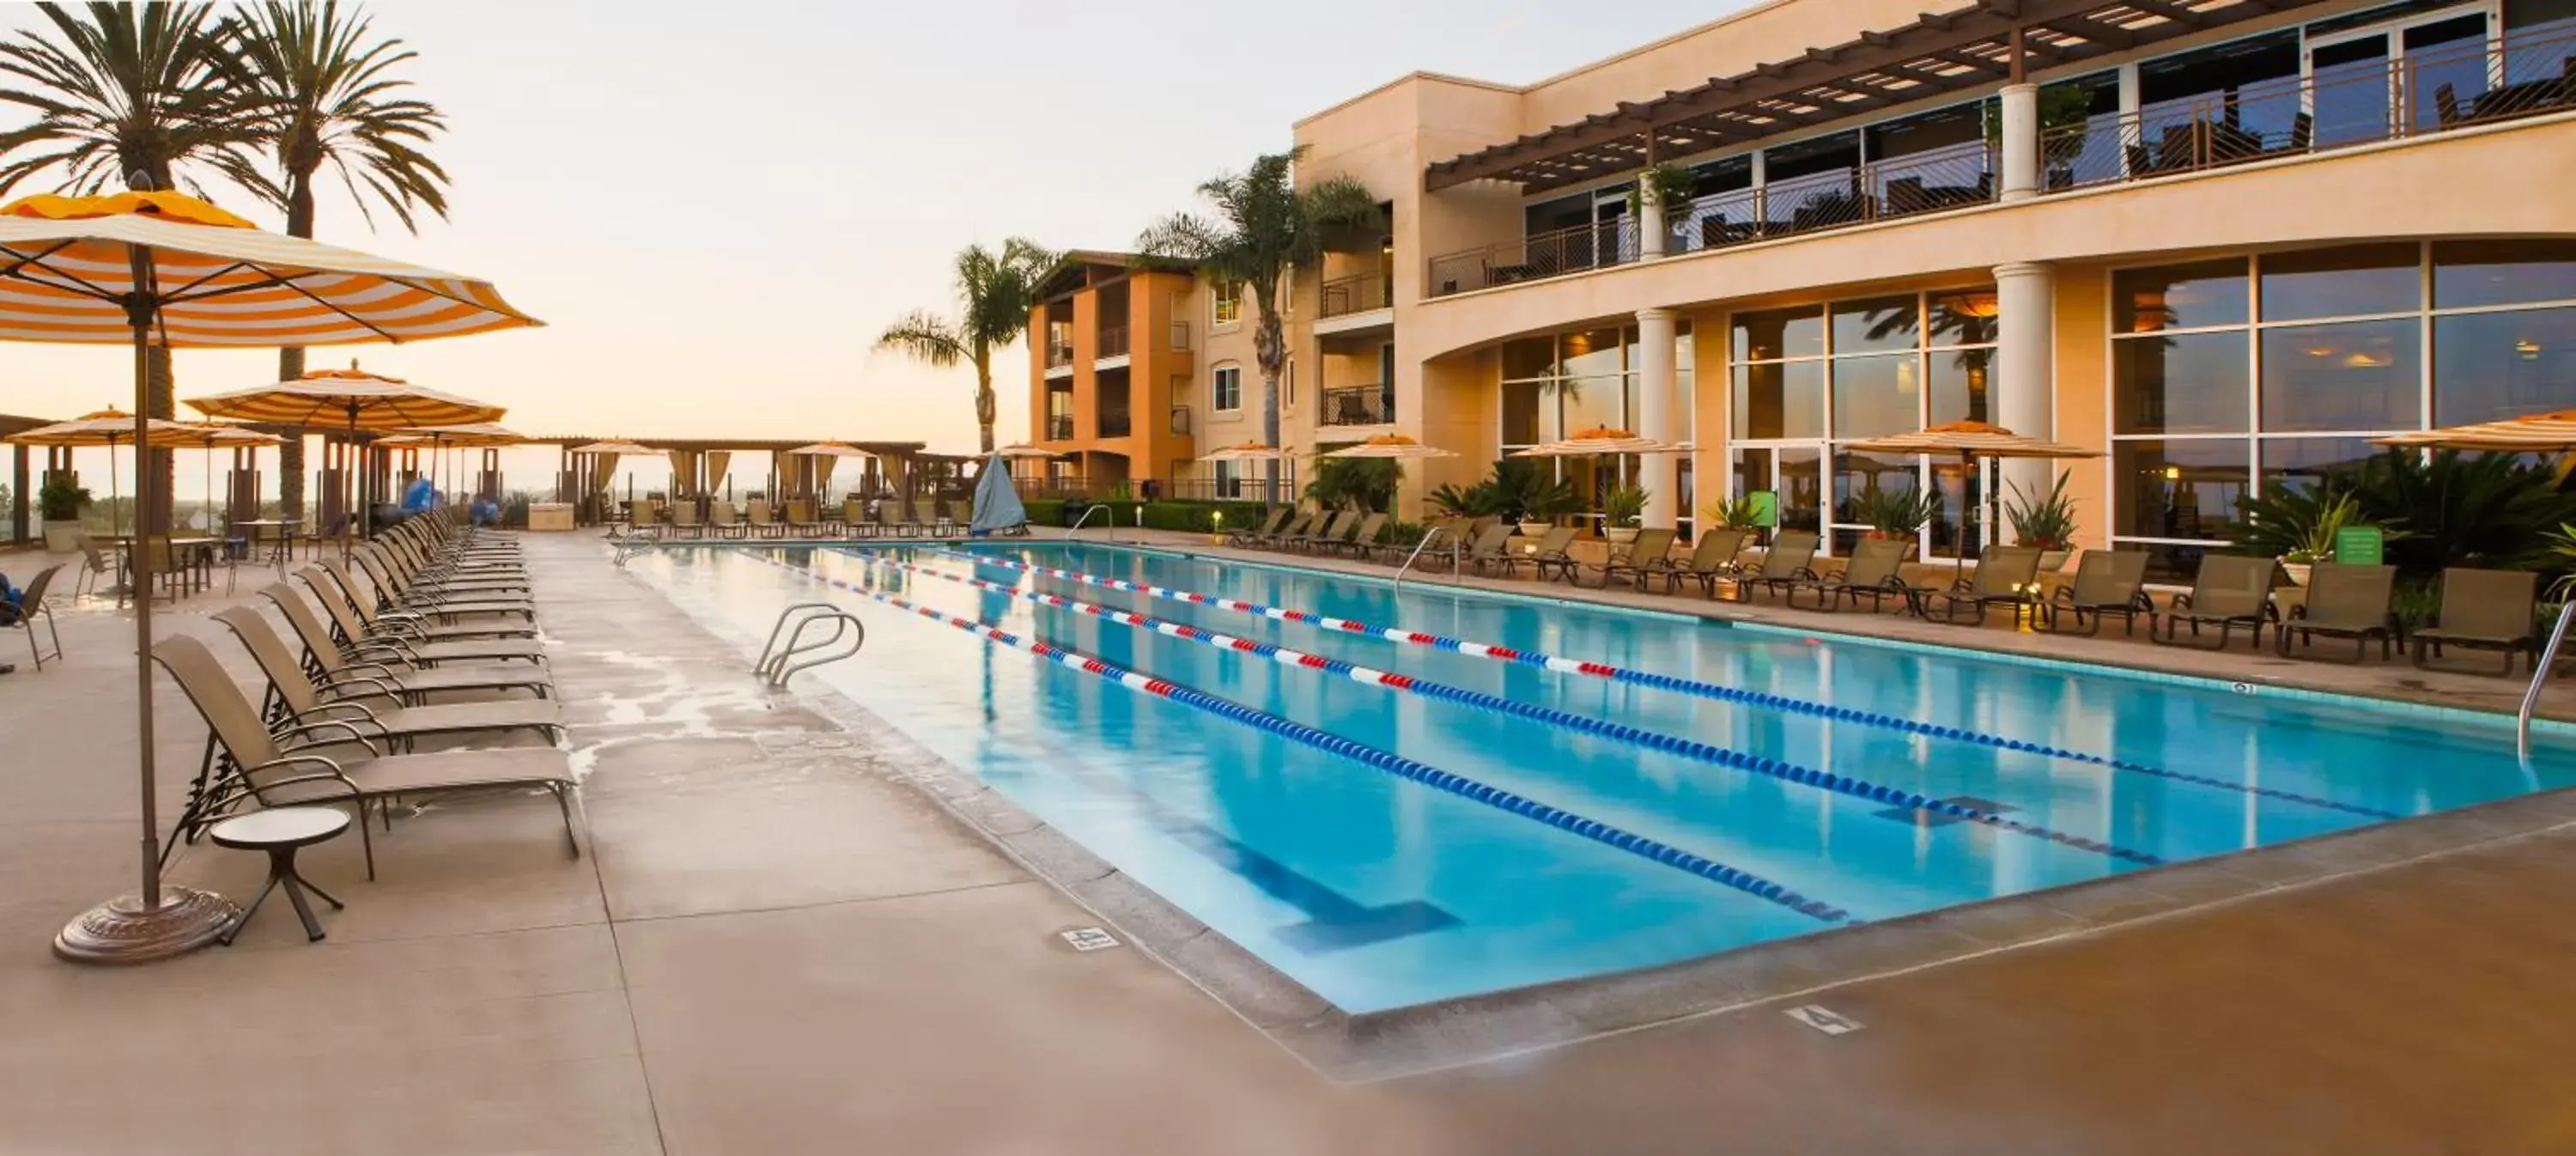 Swimming Pool in Grand Pacific Palisades Resort